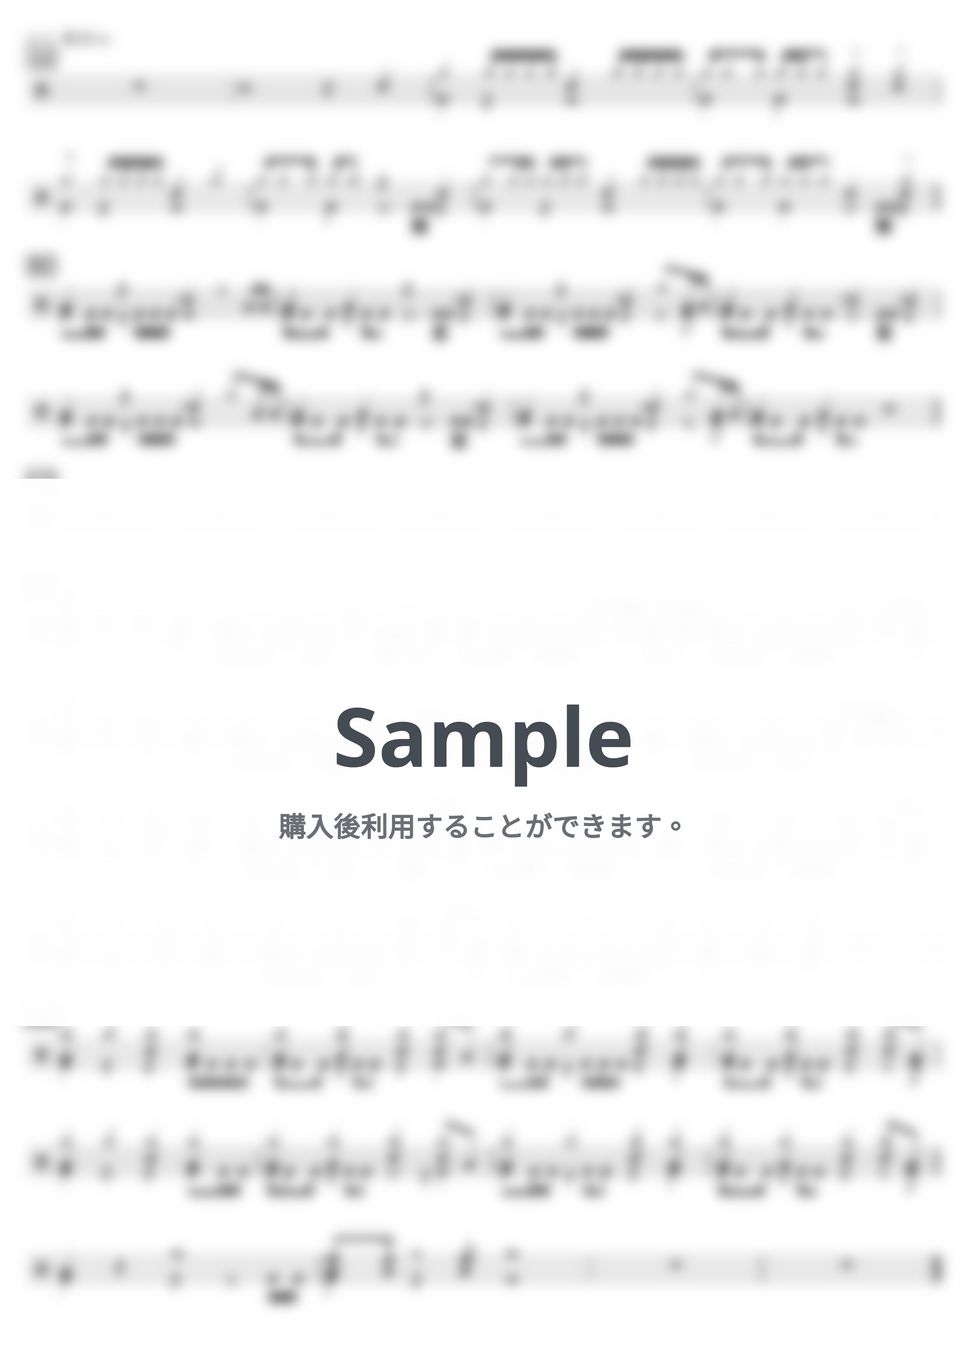 Ado (ウタfrom ONE PIECE) - Tot Musica (上級) by kamishinjo-drum-school